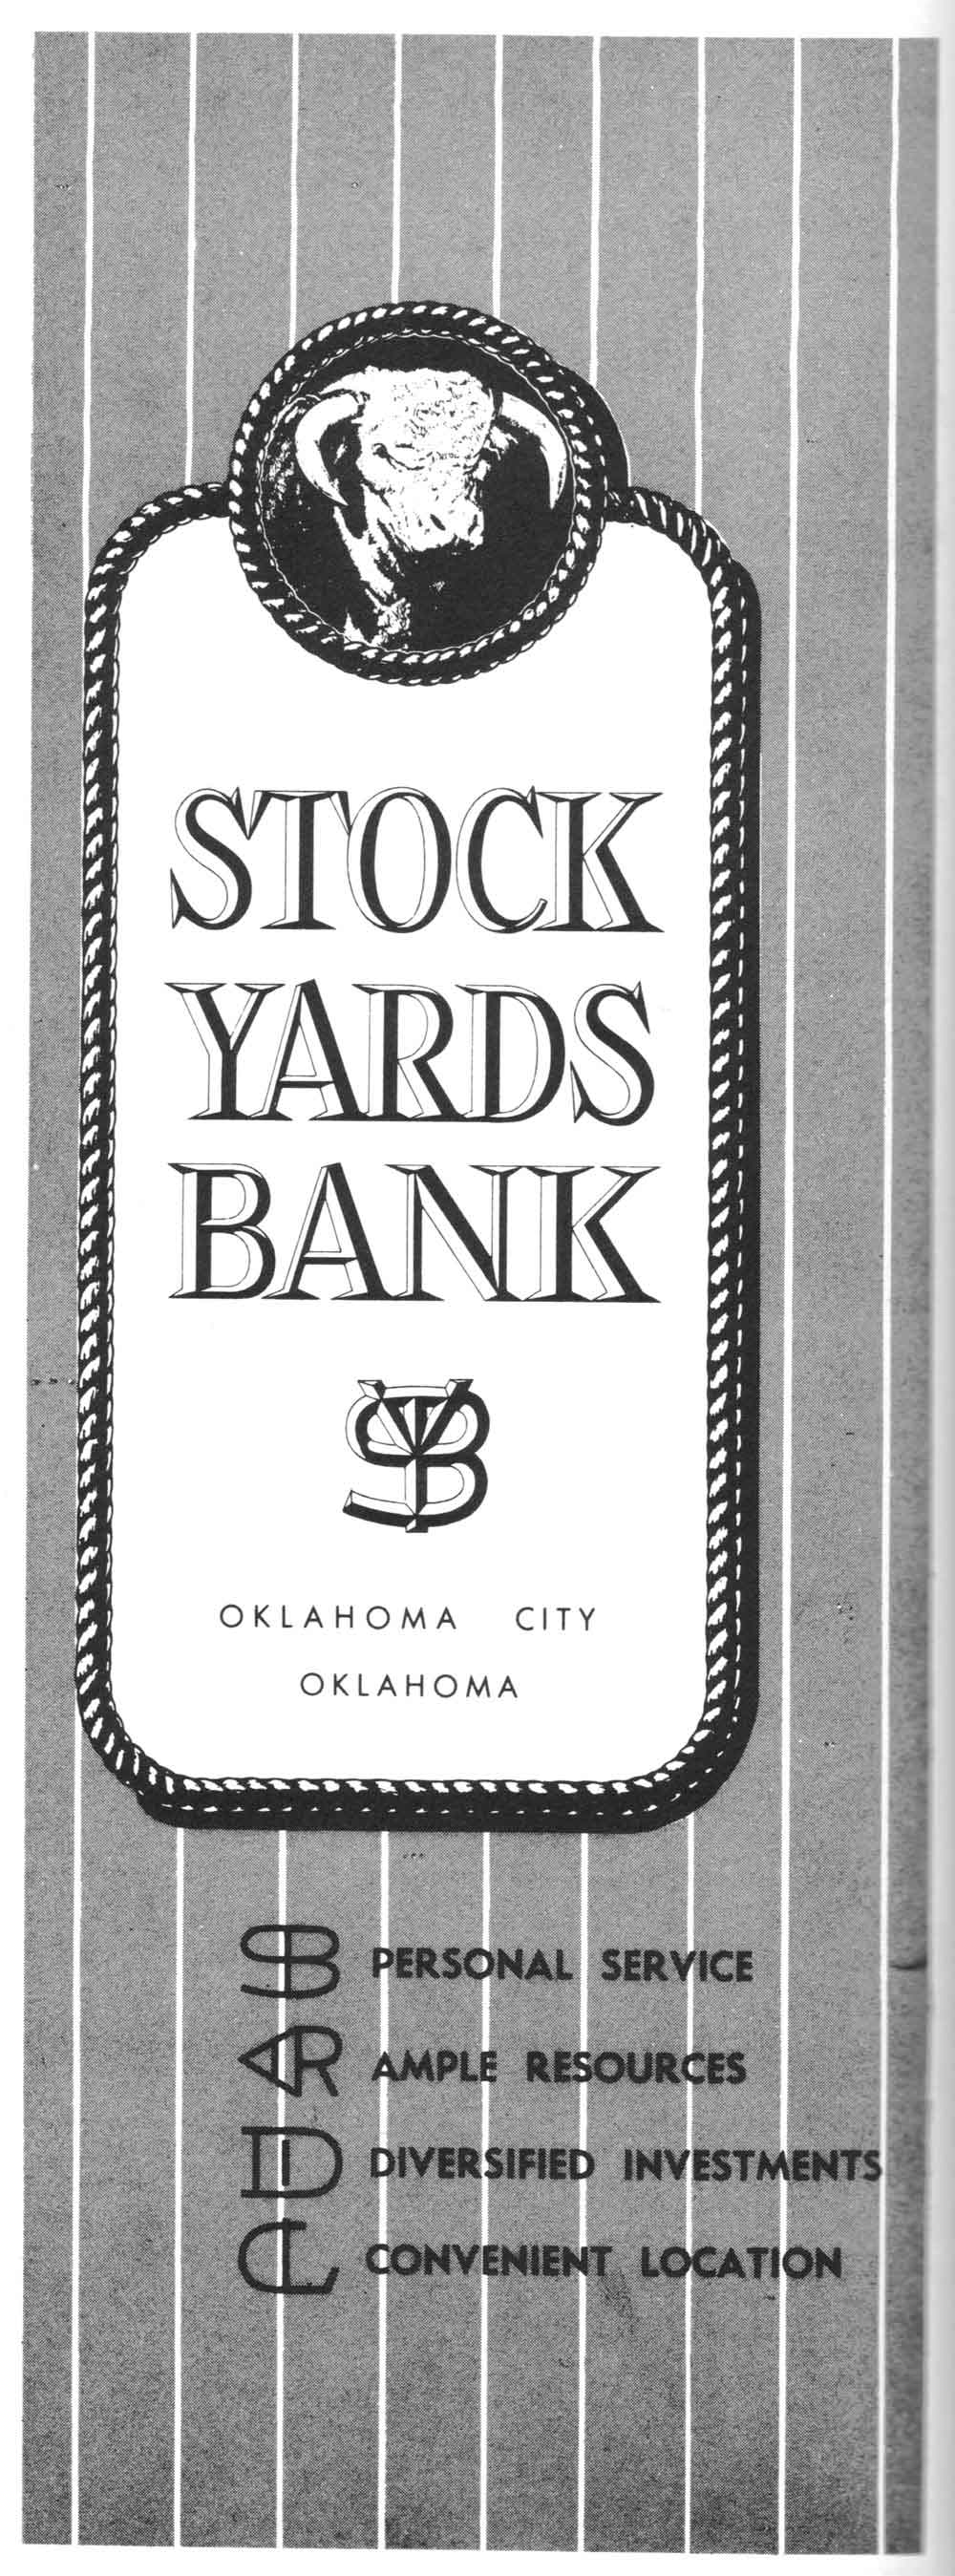 (KYLE.2010.01.21) - Stock Yards Bank